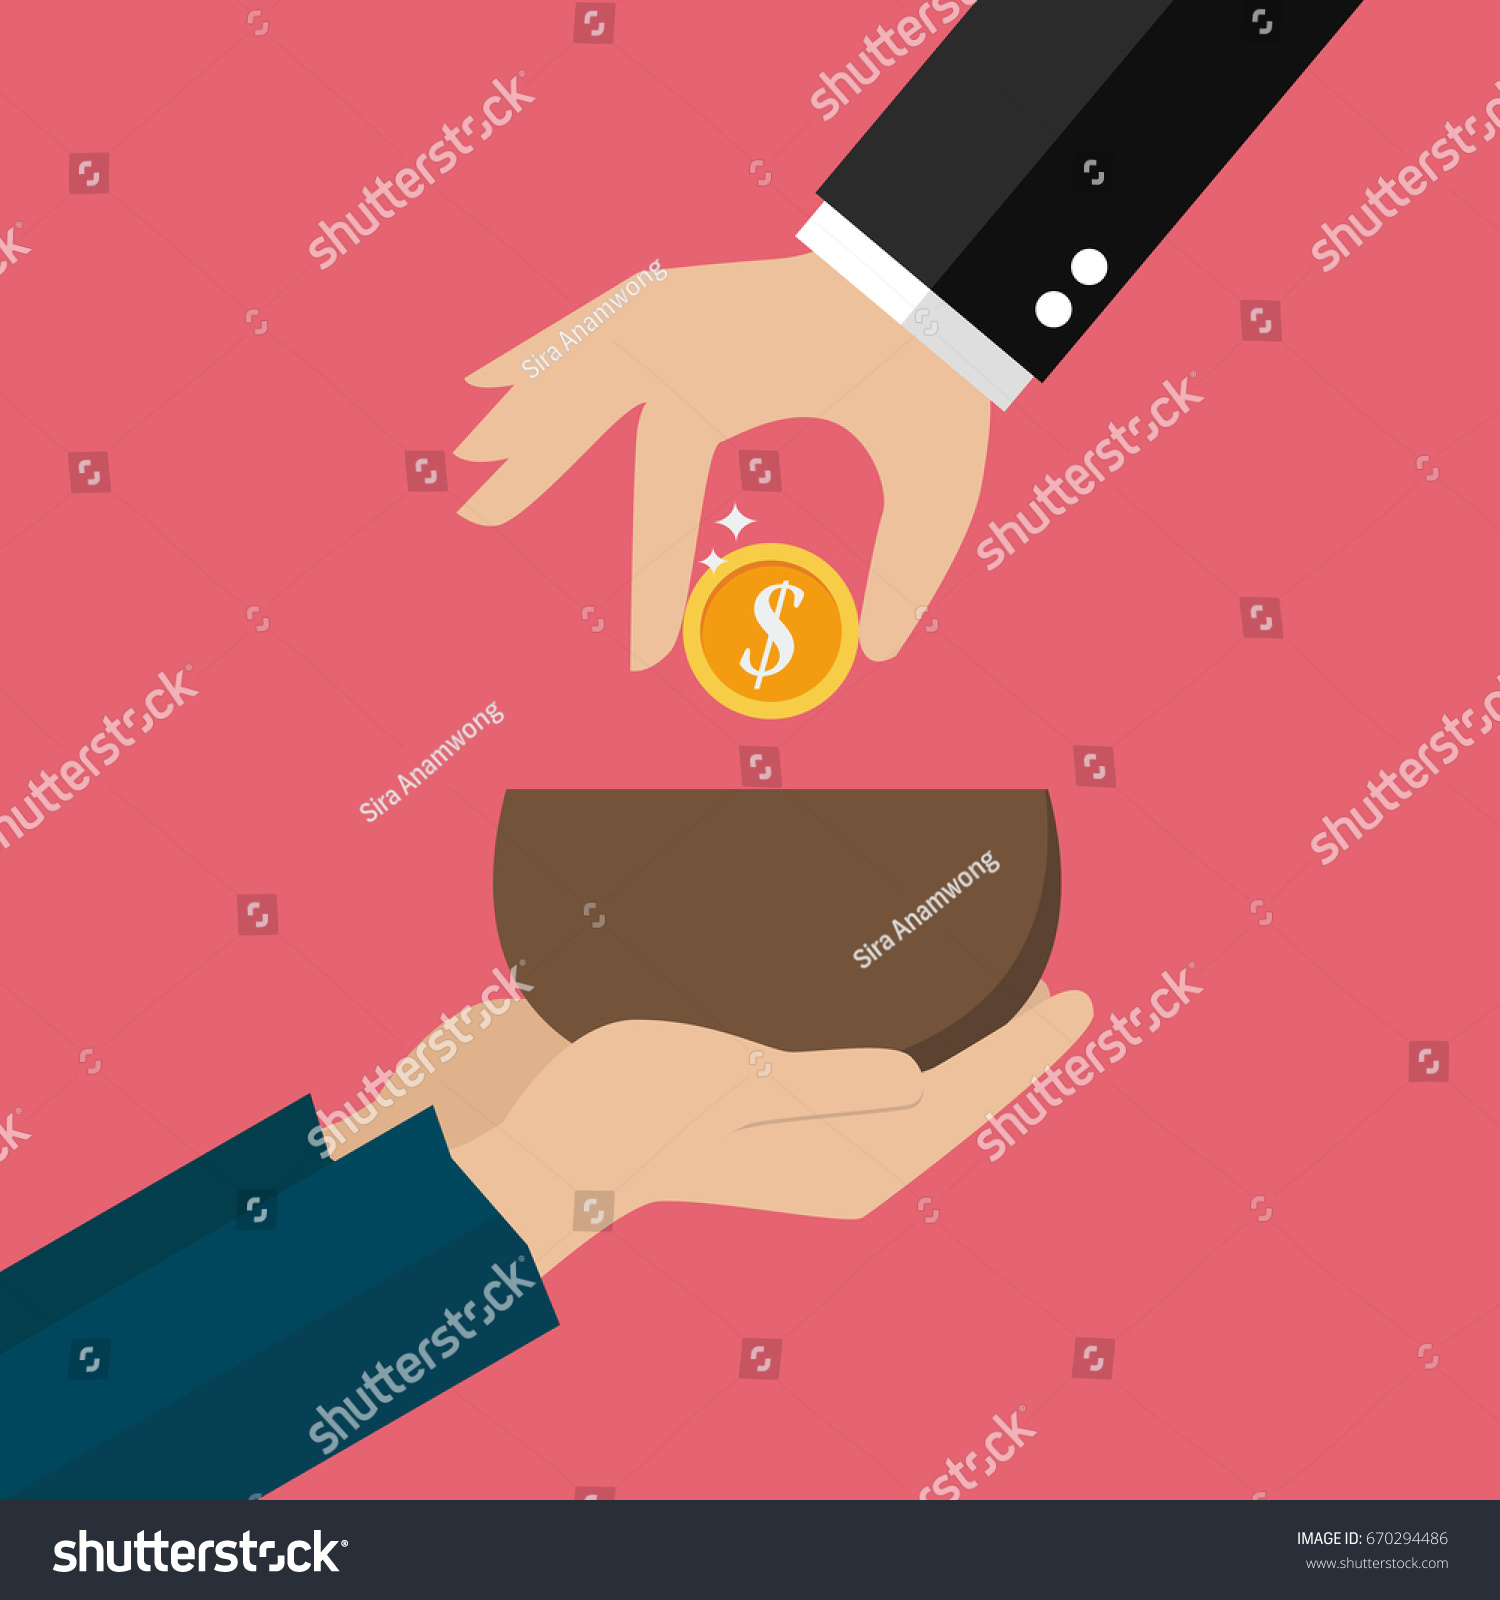 SVG of Hand giving money to beggar hand. Vector illustration svg